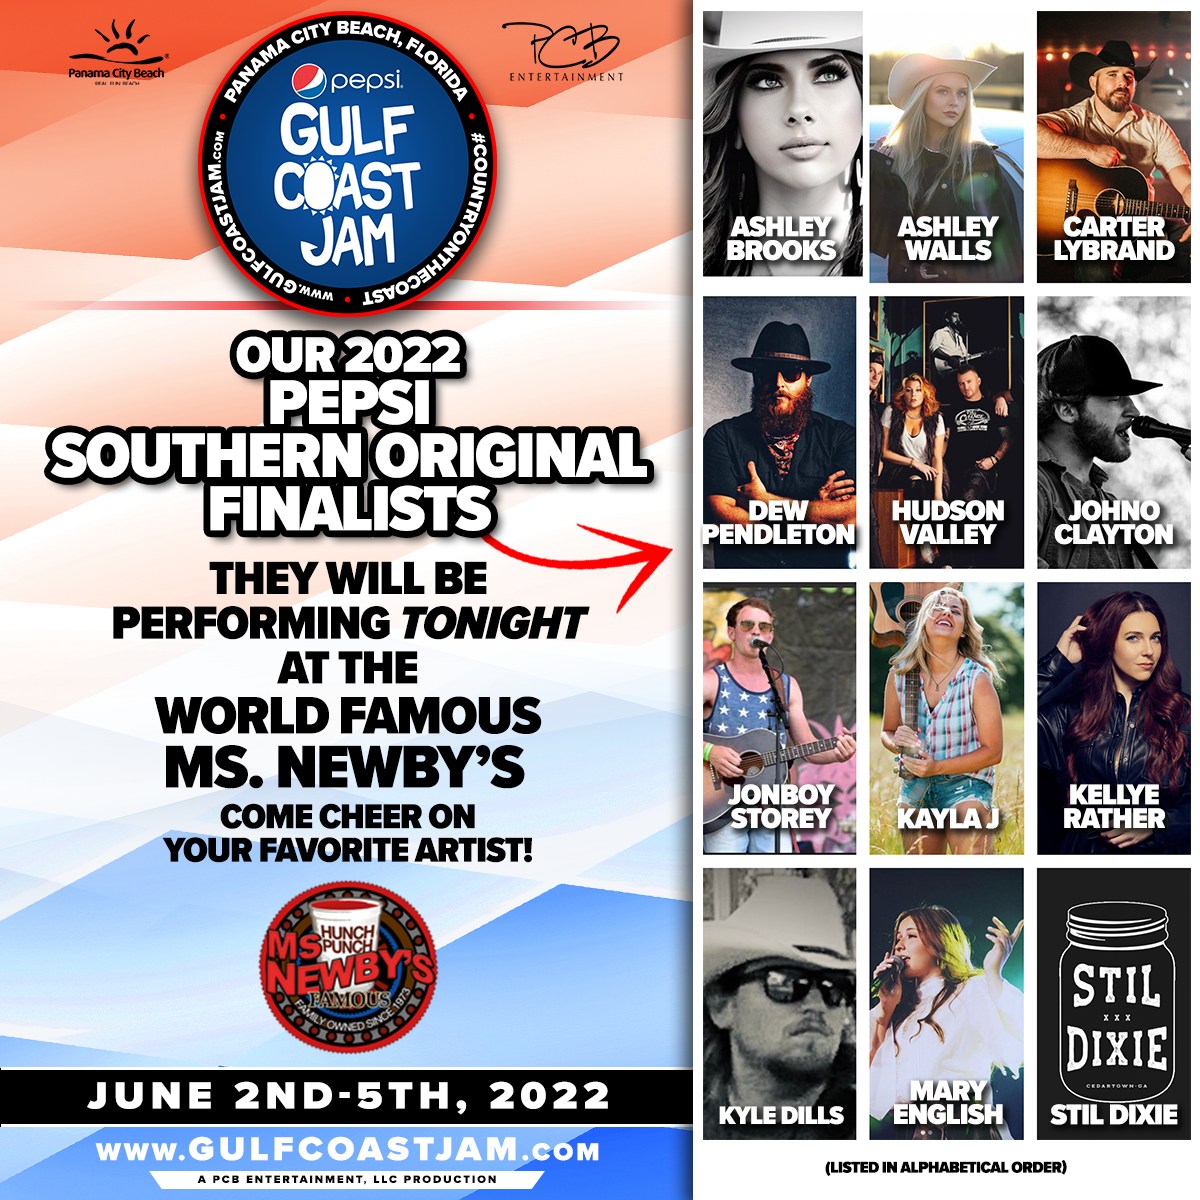 The Pepsi Gulf Coast Jame and Pepsi Southern Original Contest